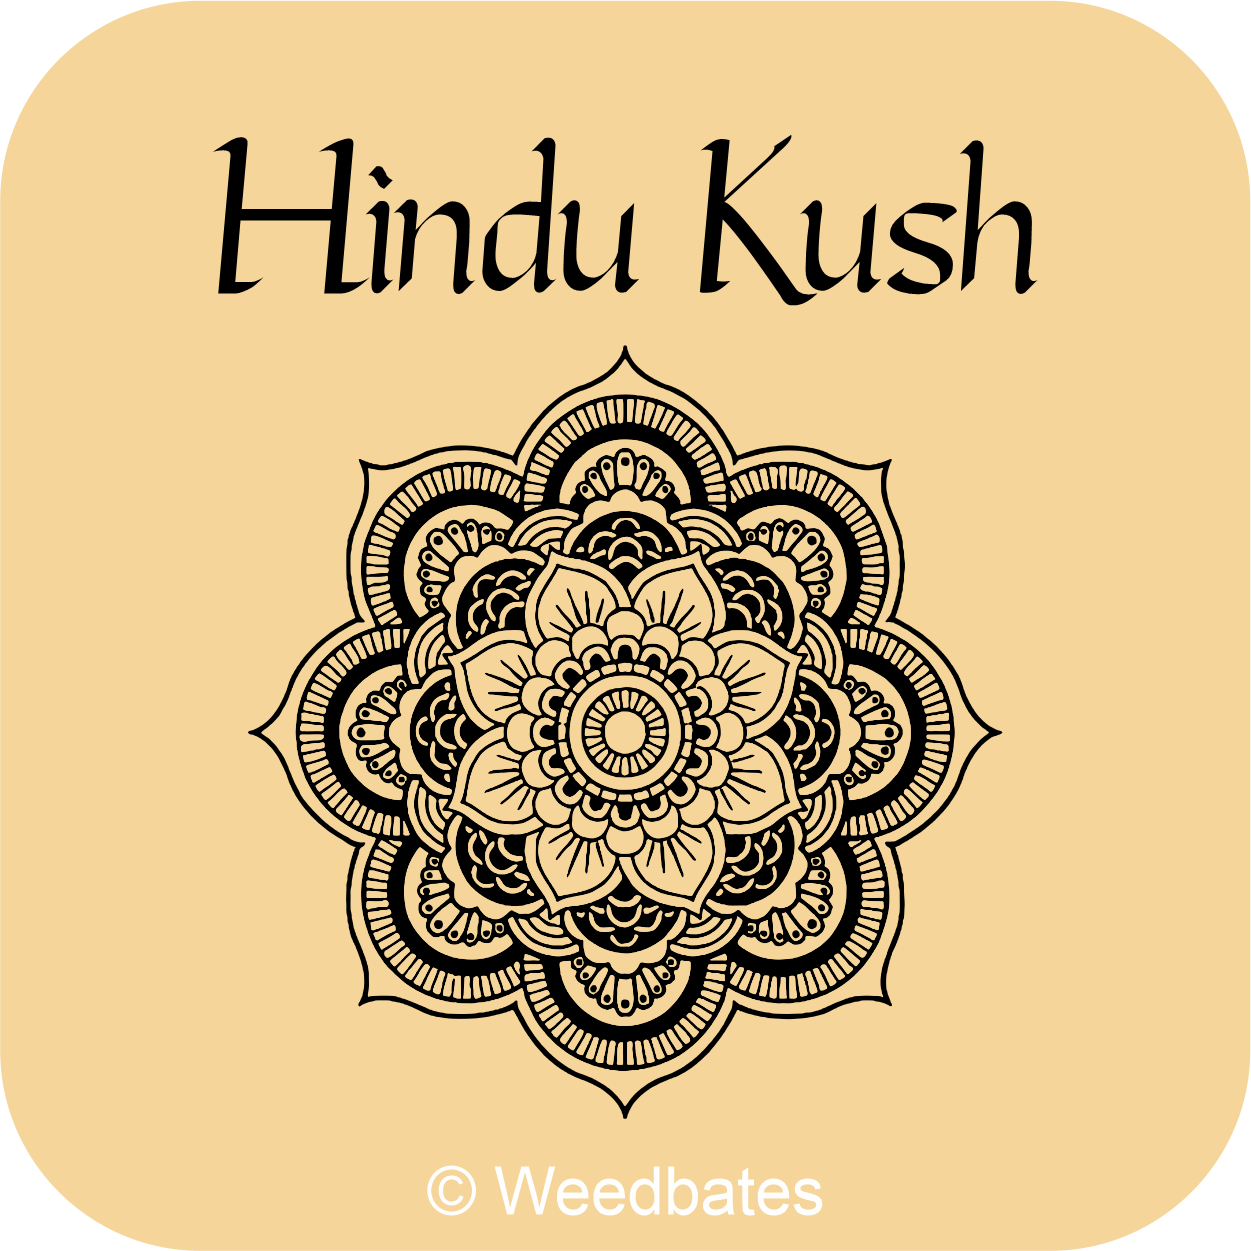 Hindu Kush effects